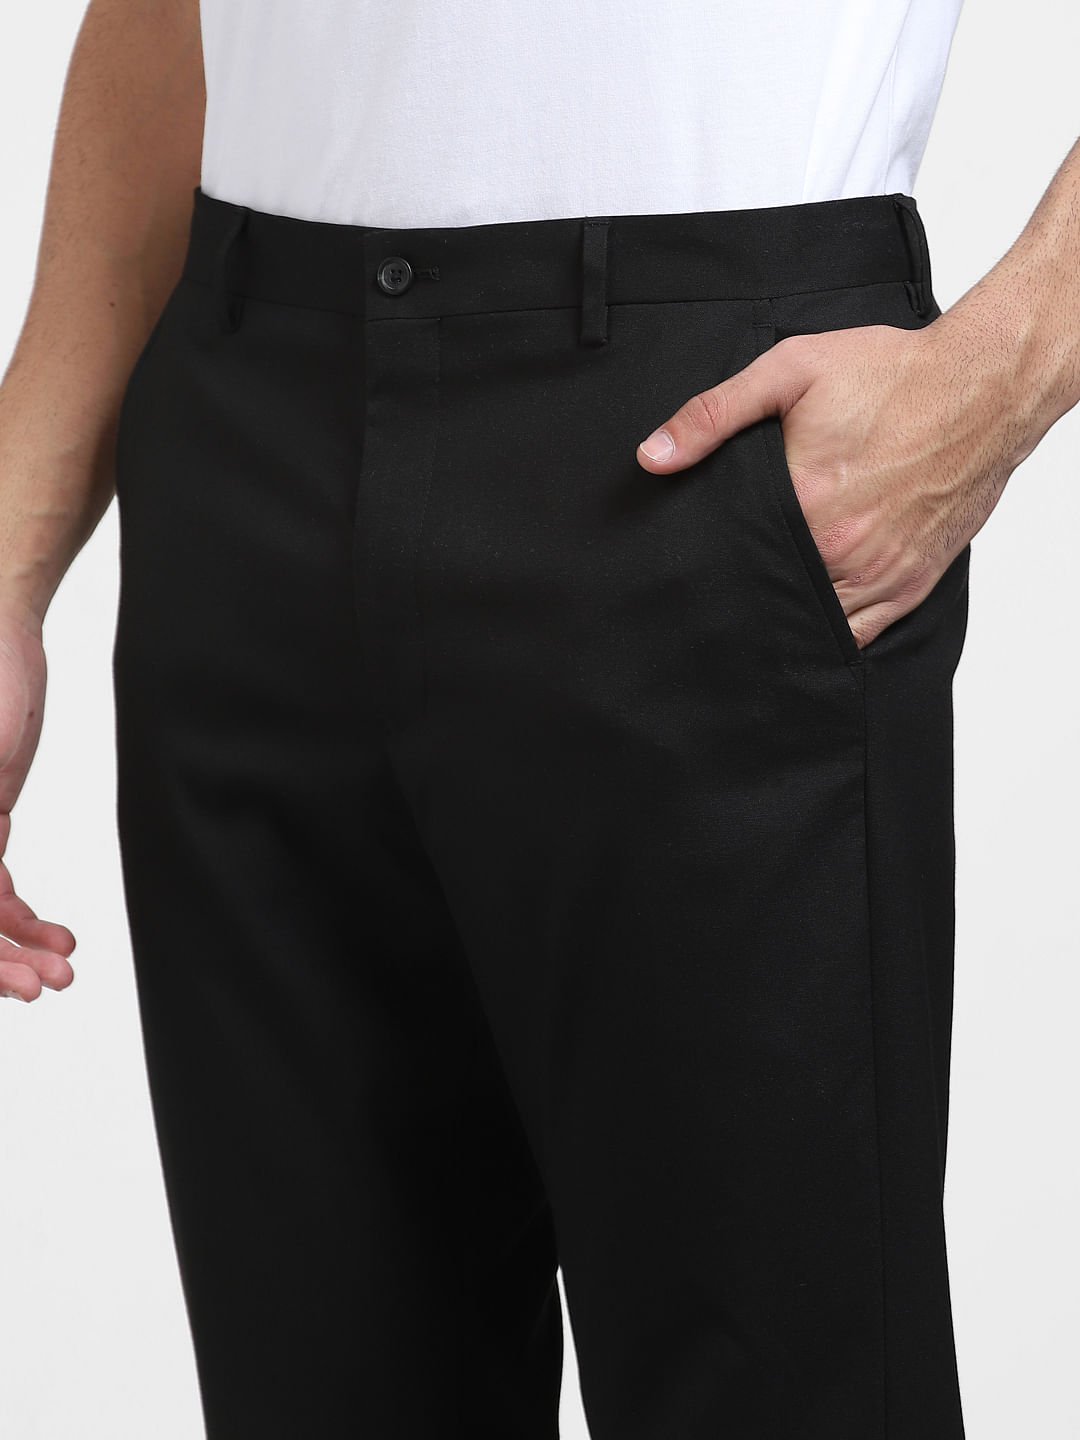 Black White Business Formal Pants Men Korean Style Slim Suit Pants Ankle  Pants | eBay